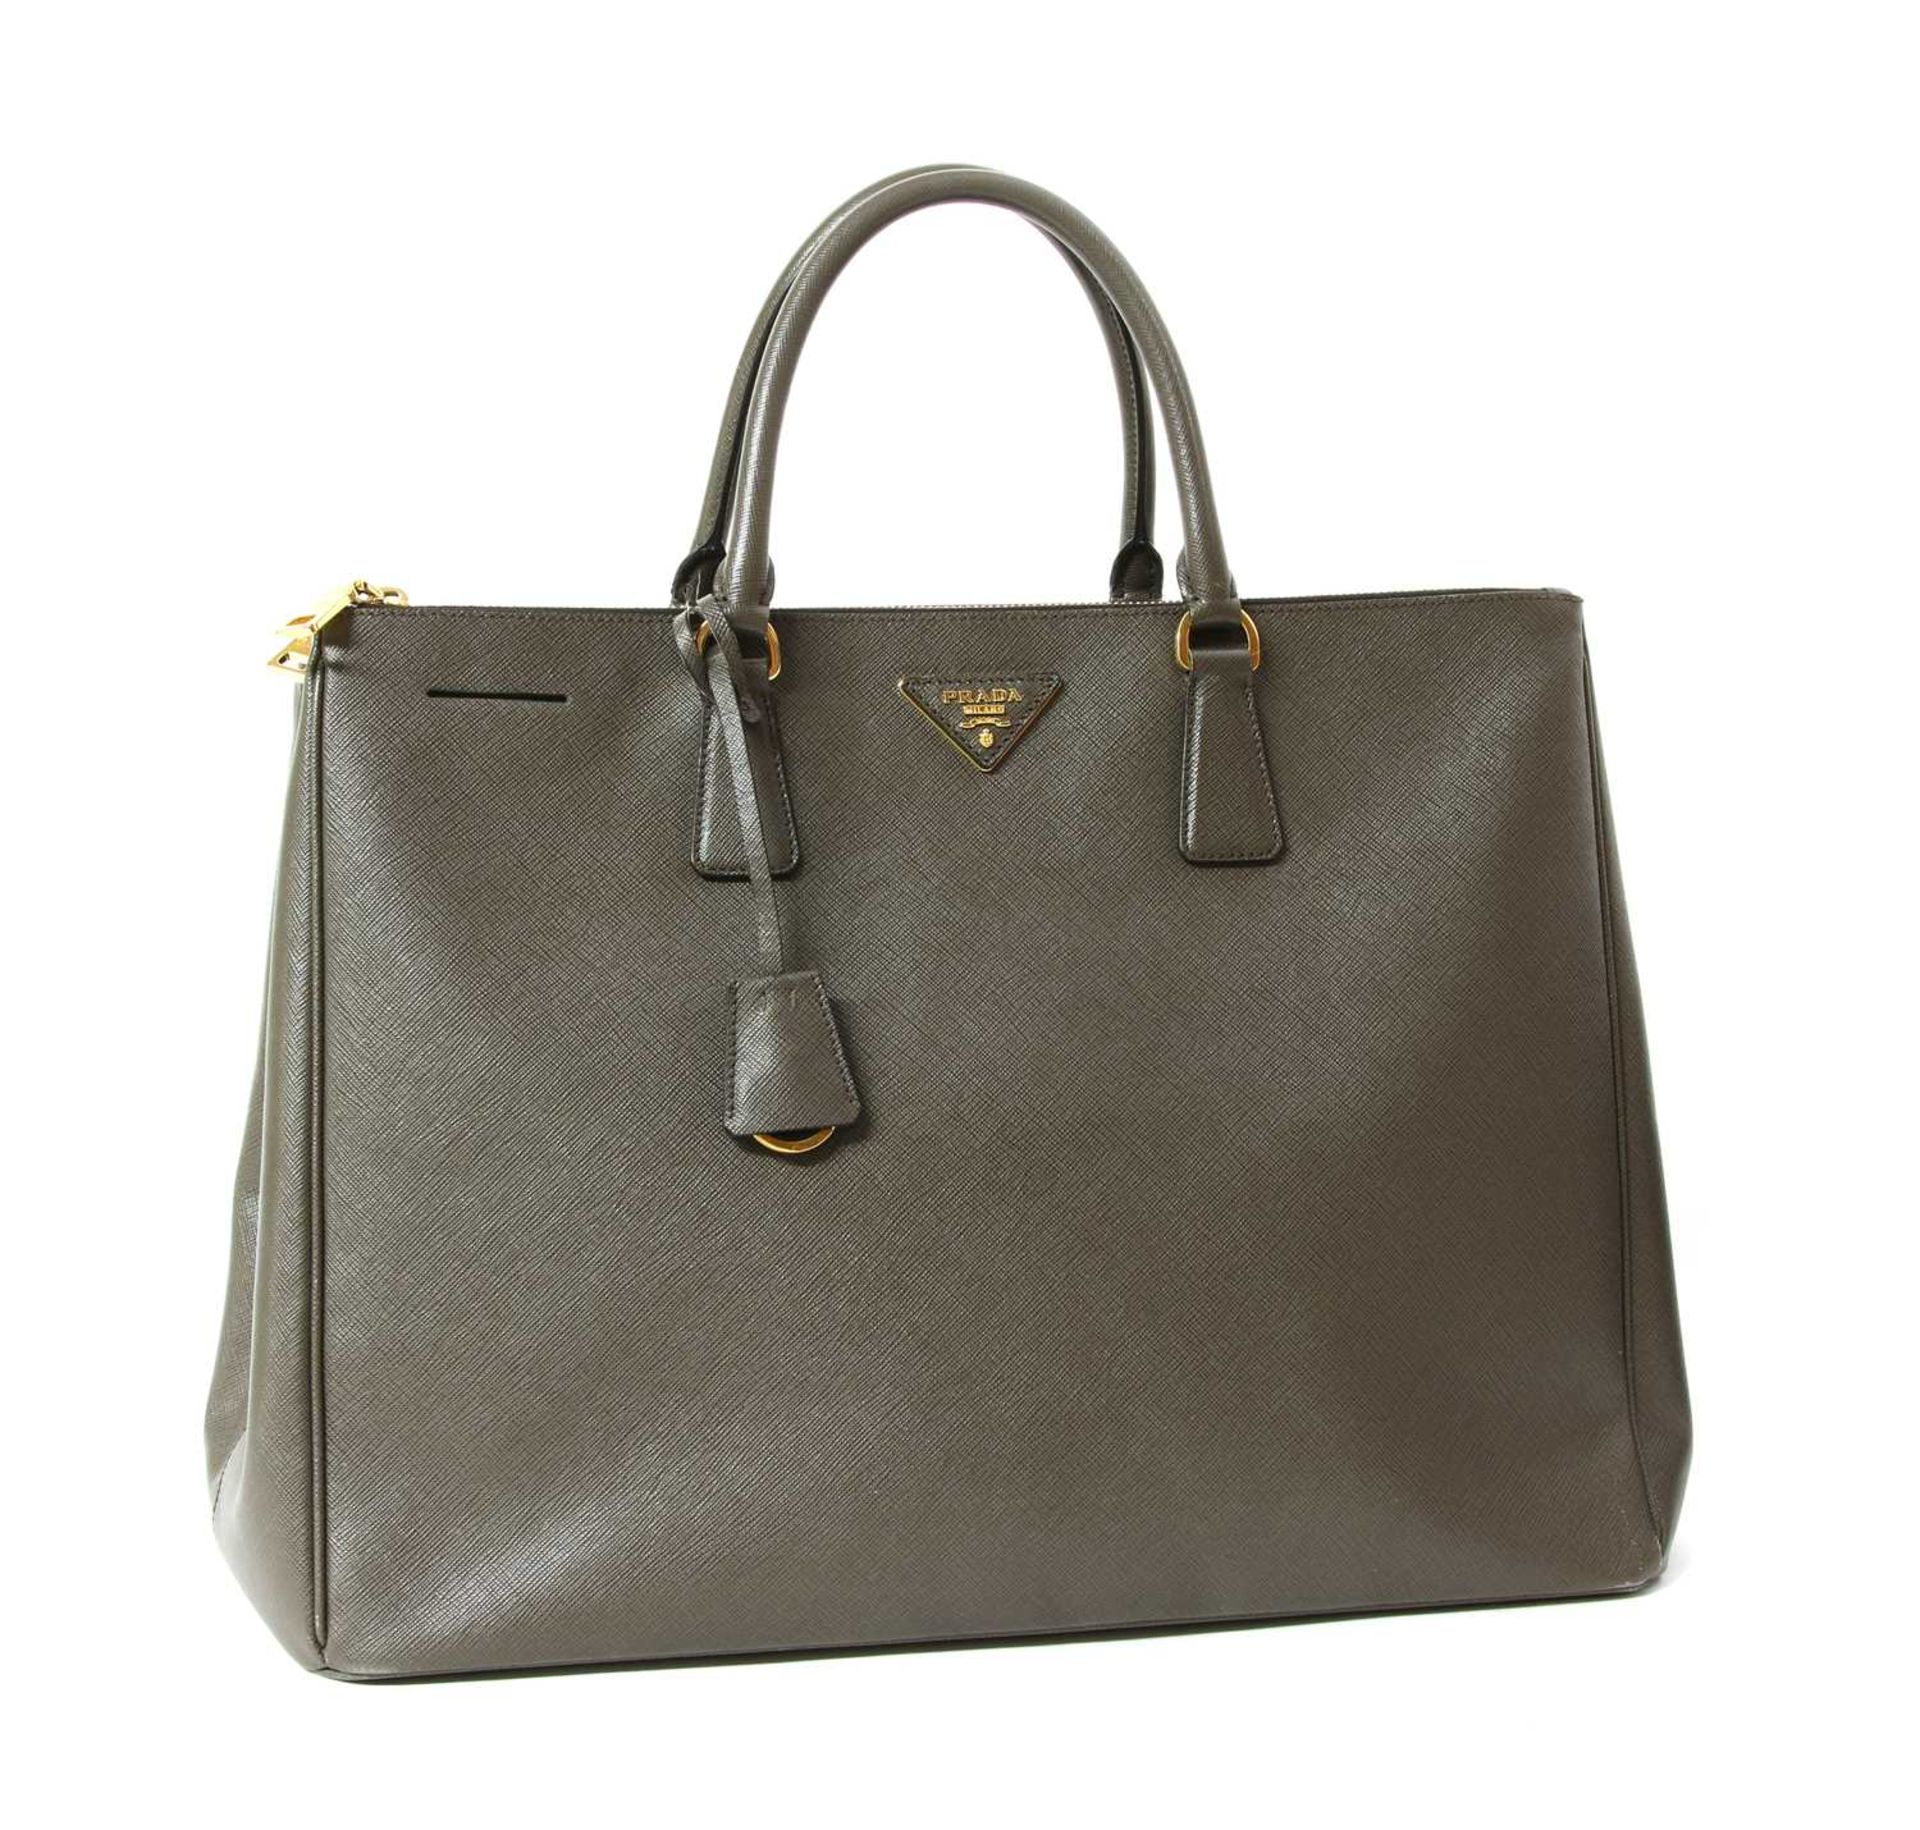 A Prada Saffiano Lux Graphite leather bag,